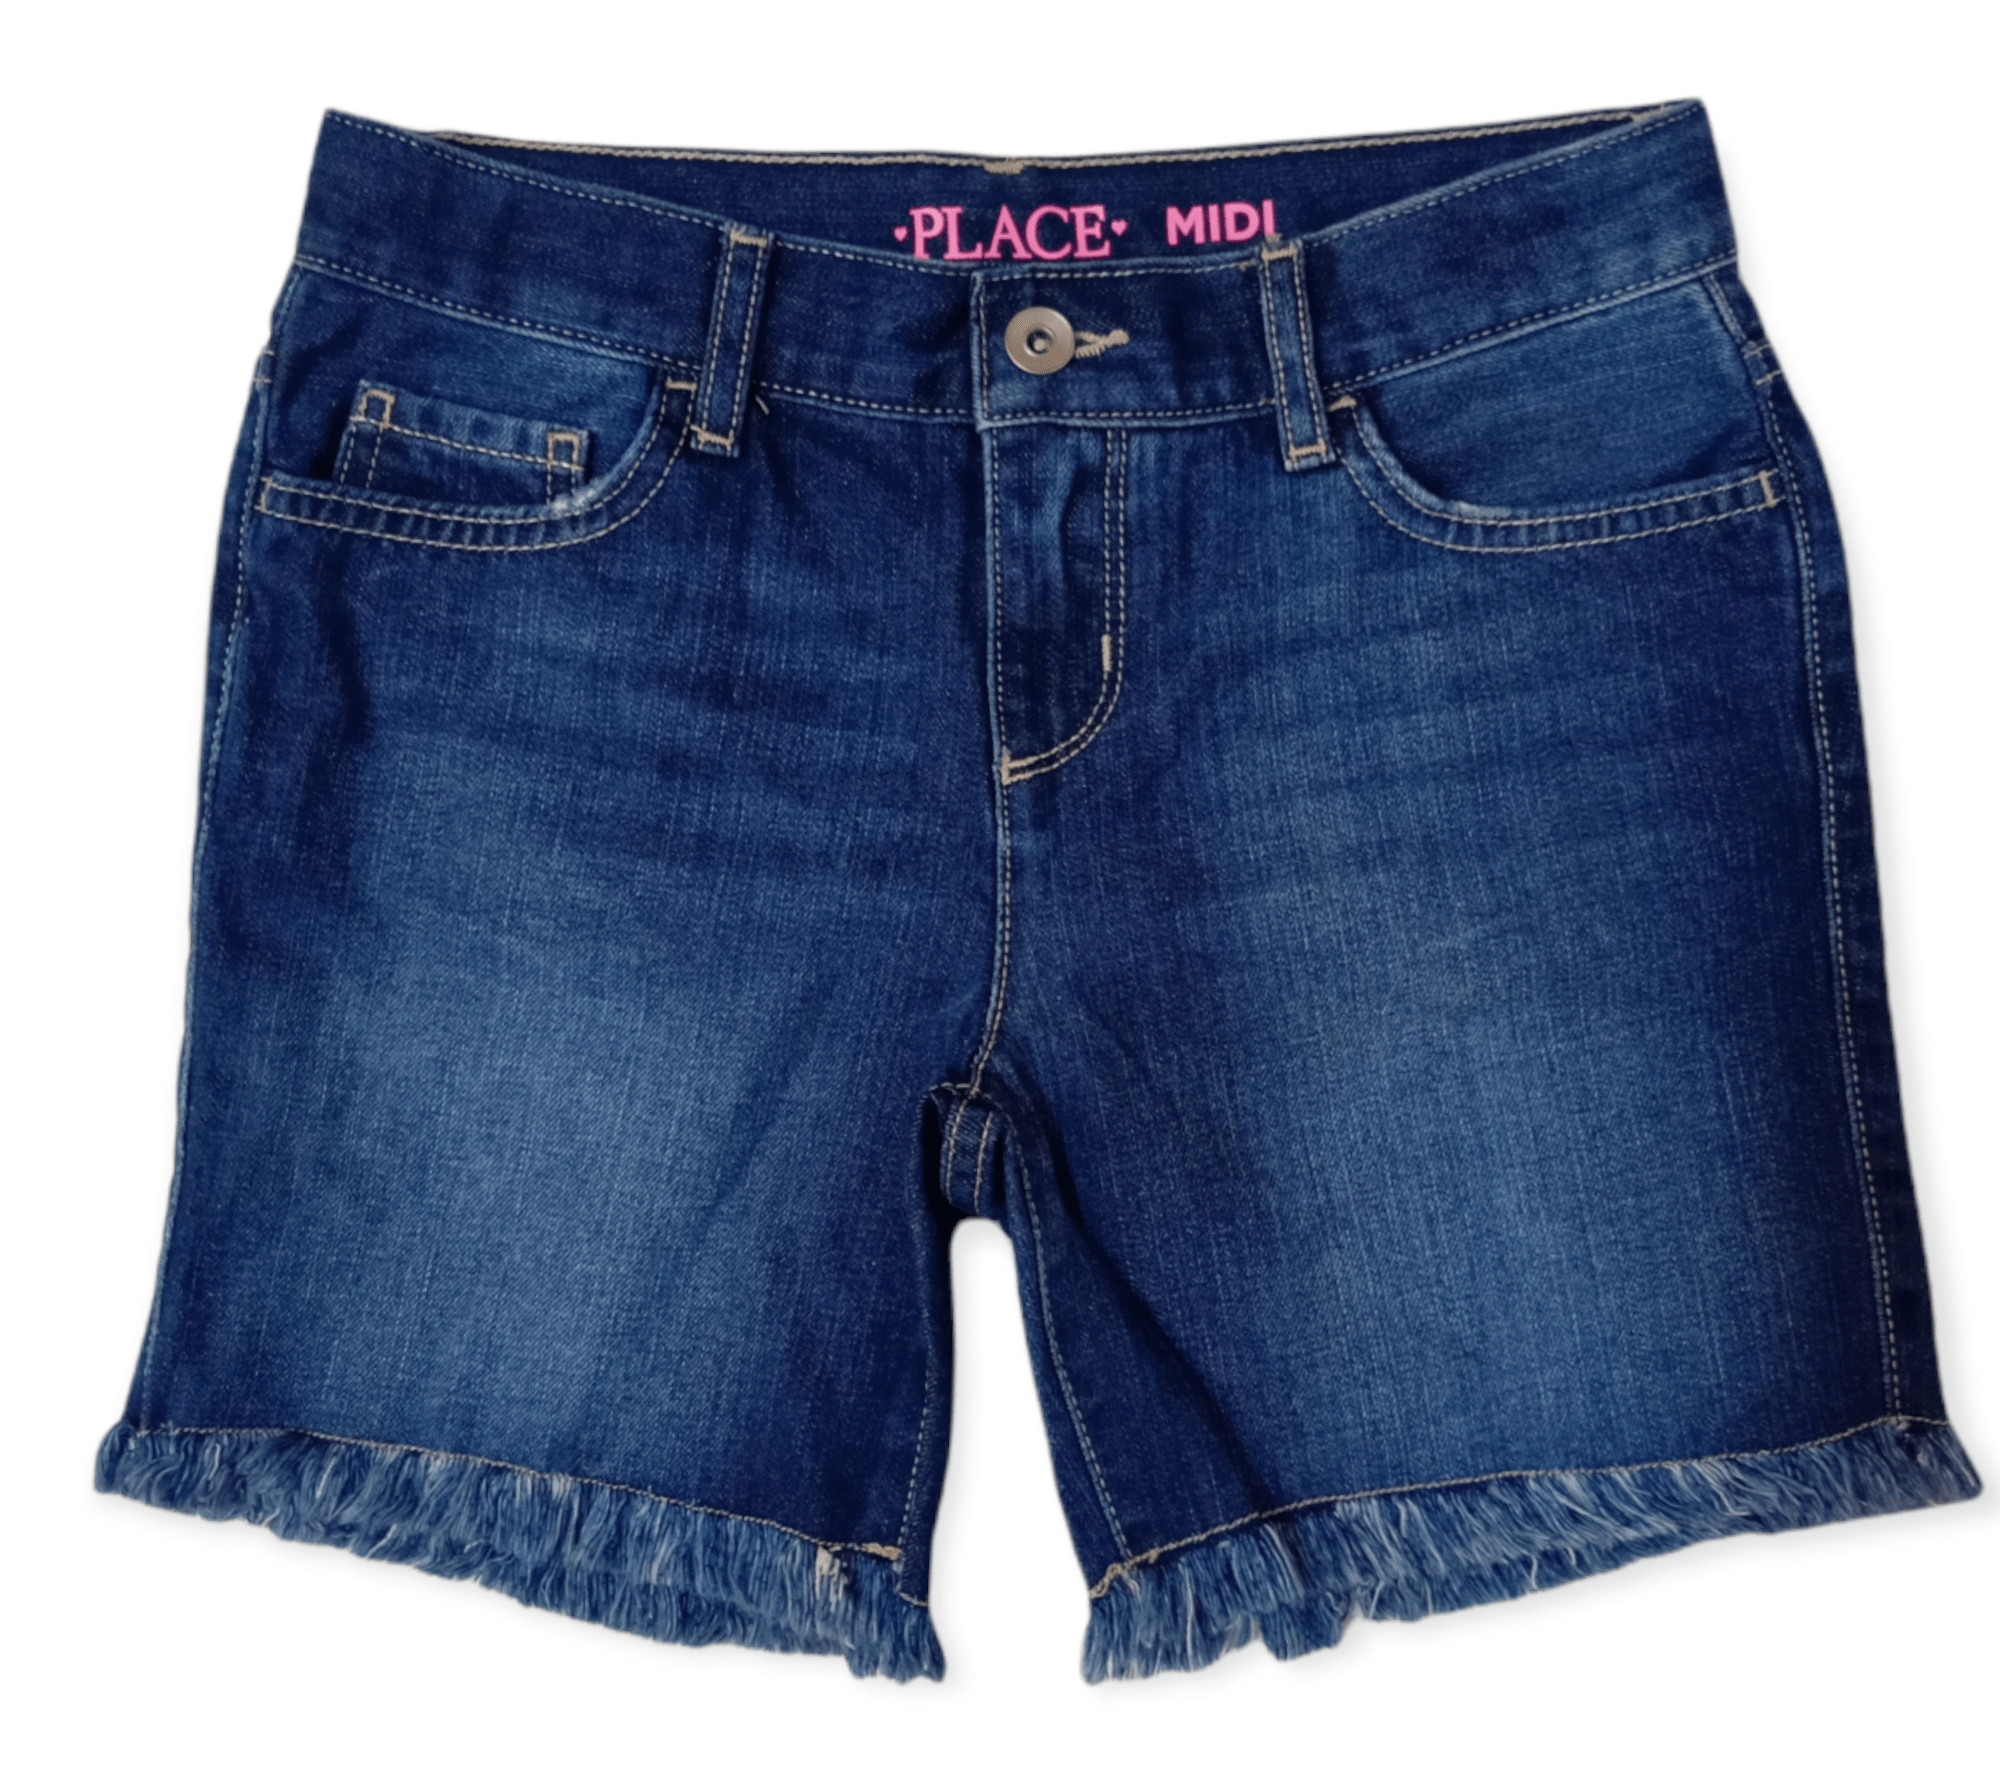 ElOutlet-Sumer Kids Kids Shorts size 12 [Kids] Girls Short - Place - Dark Blue Long Jeans